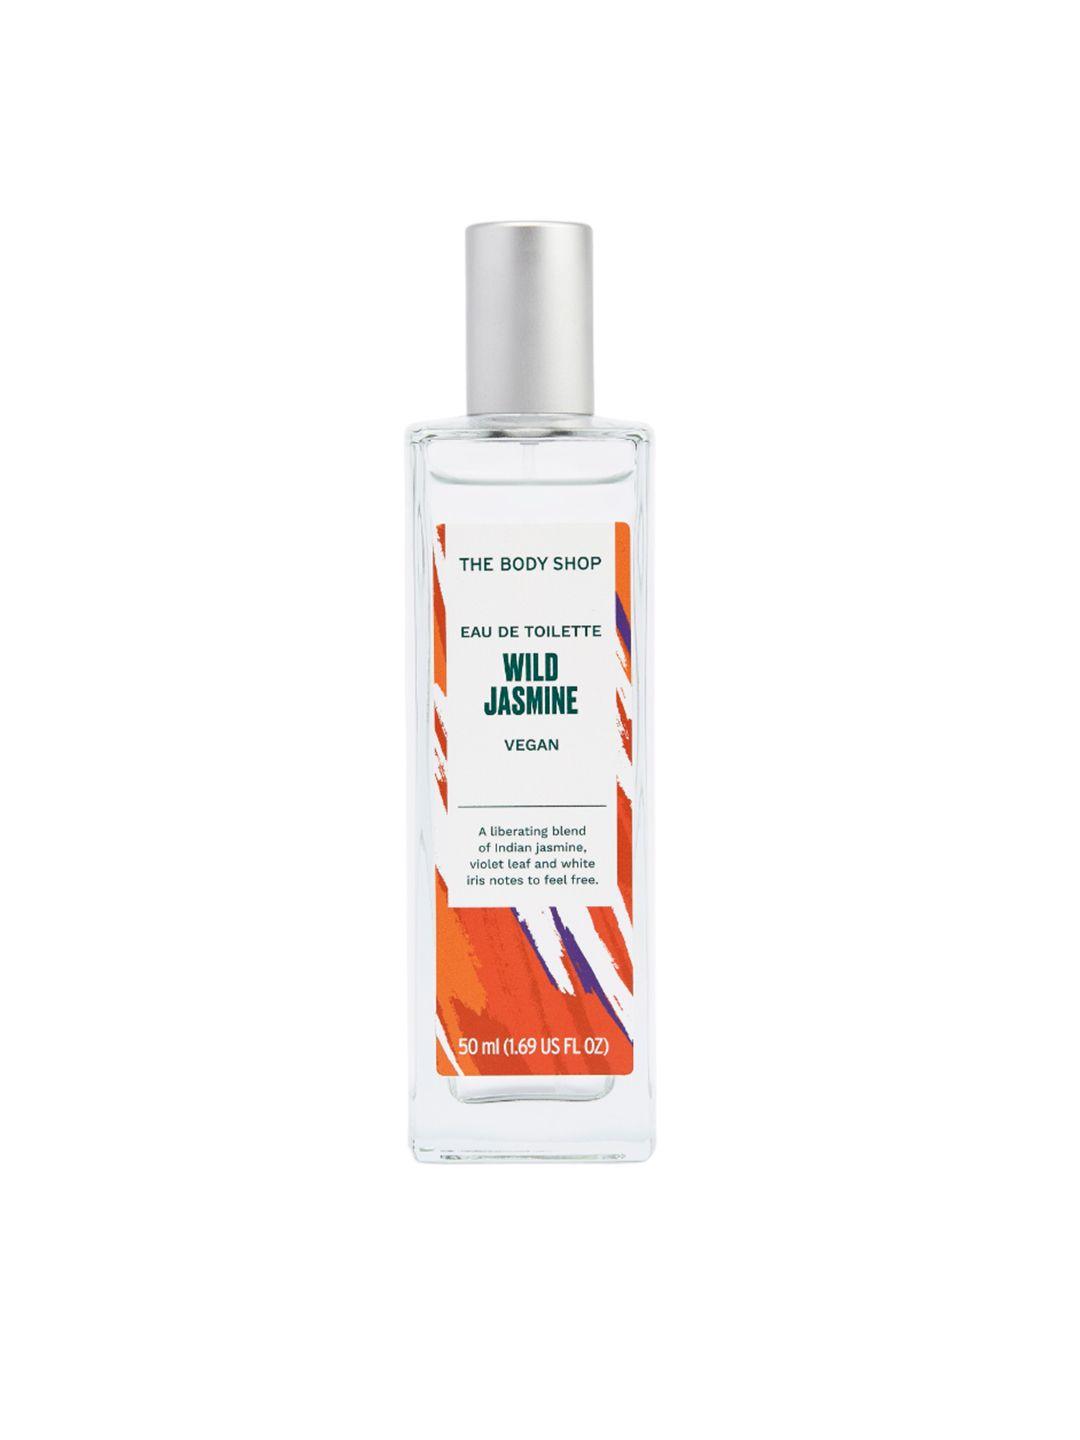 the body shop wild jasmine long lasting vegan eau de toilette - 50 ml